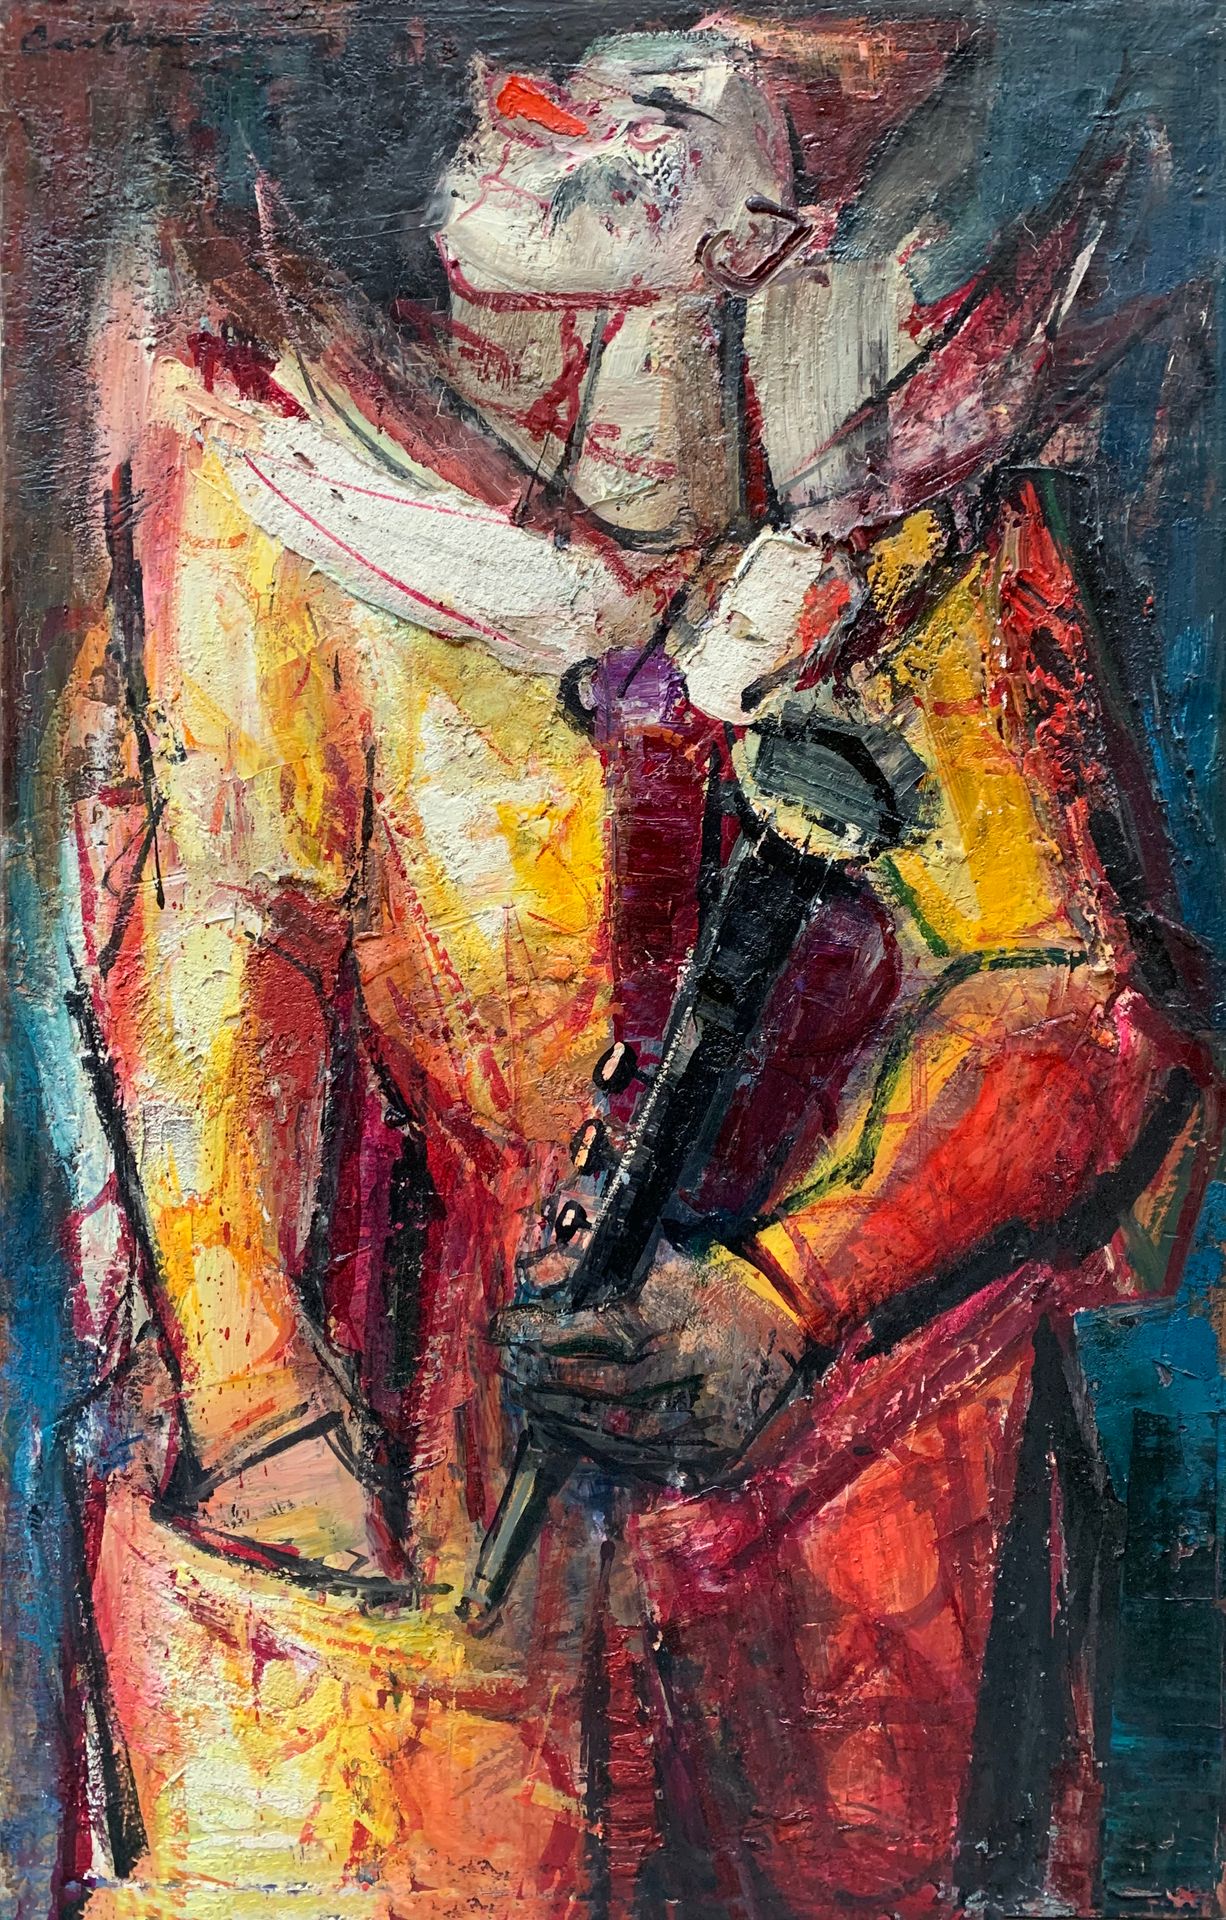 Null 罗多尔夫-凯洛（Rodolphe CAILLAUX） (1904-1989)

小丑单簧管演奏家

布面油画，左上角有签名

100 x 65厘米。